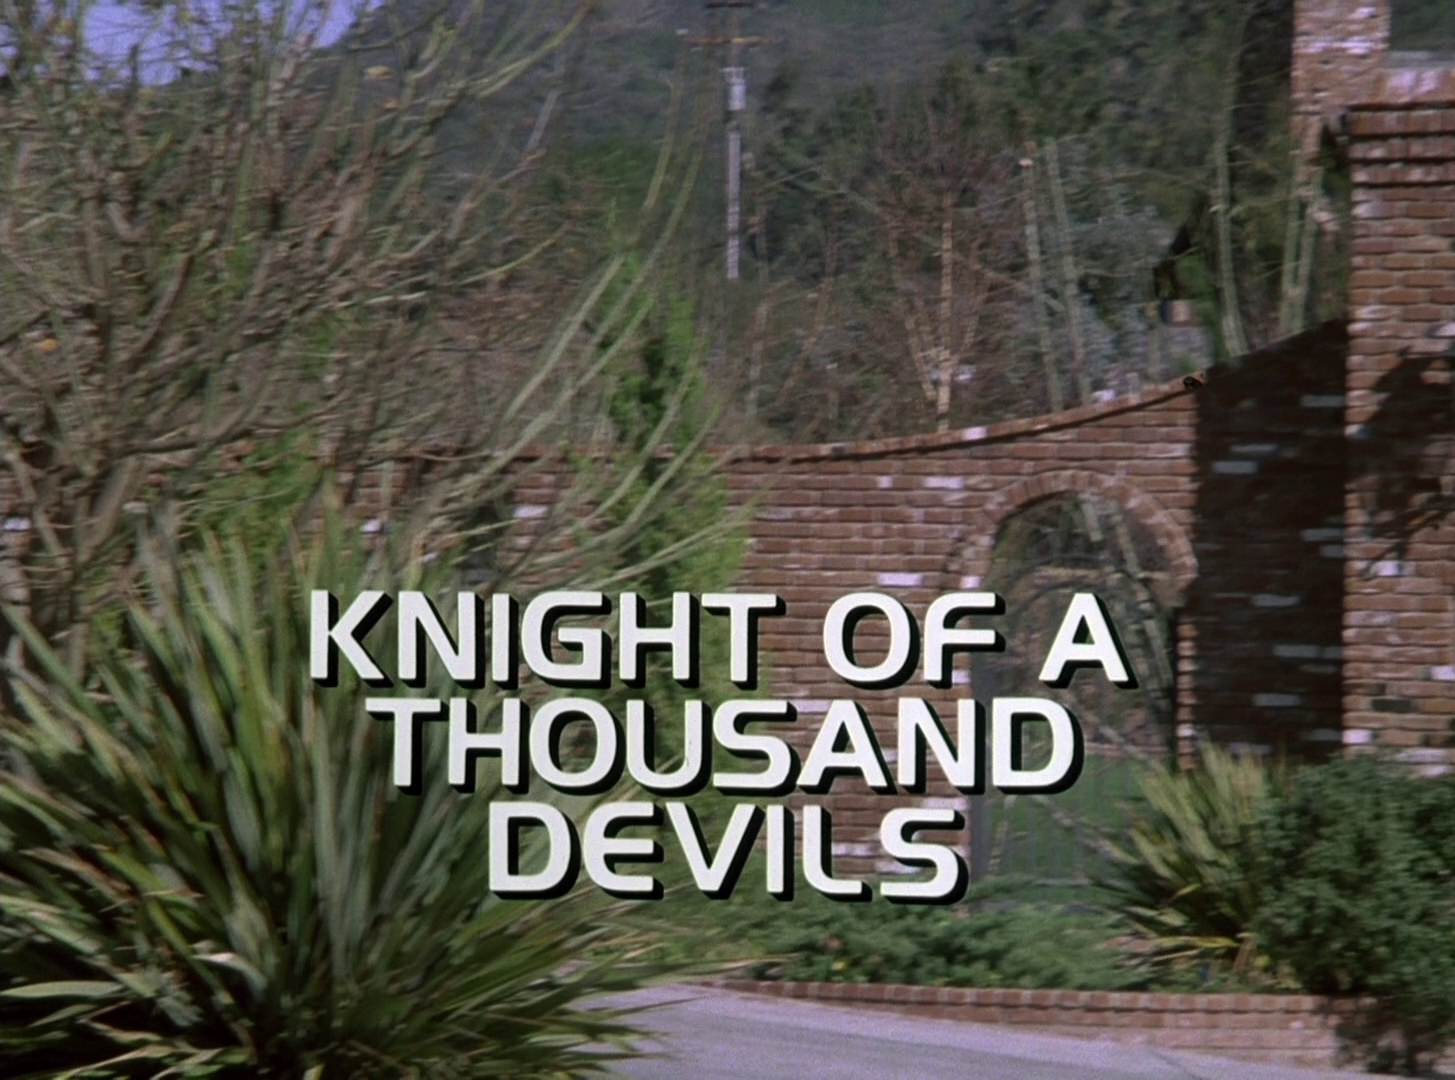 Knight Rider Season 4 - Episode 79 - Knight Of A Thousand Devils - Photo 1